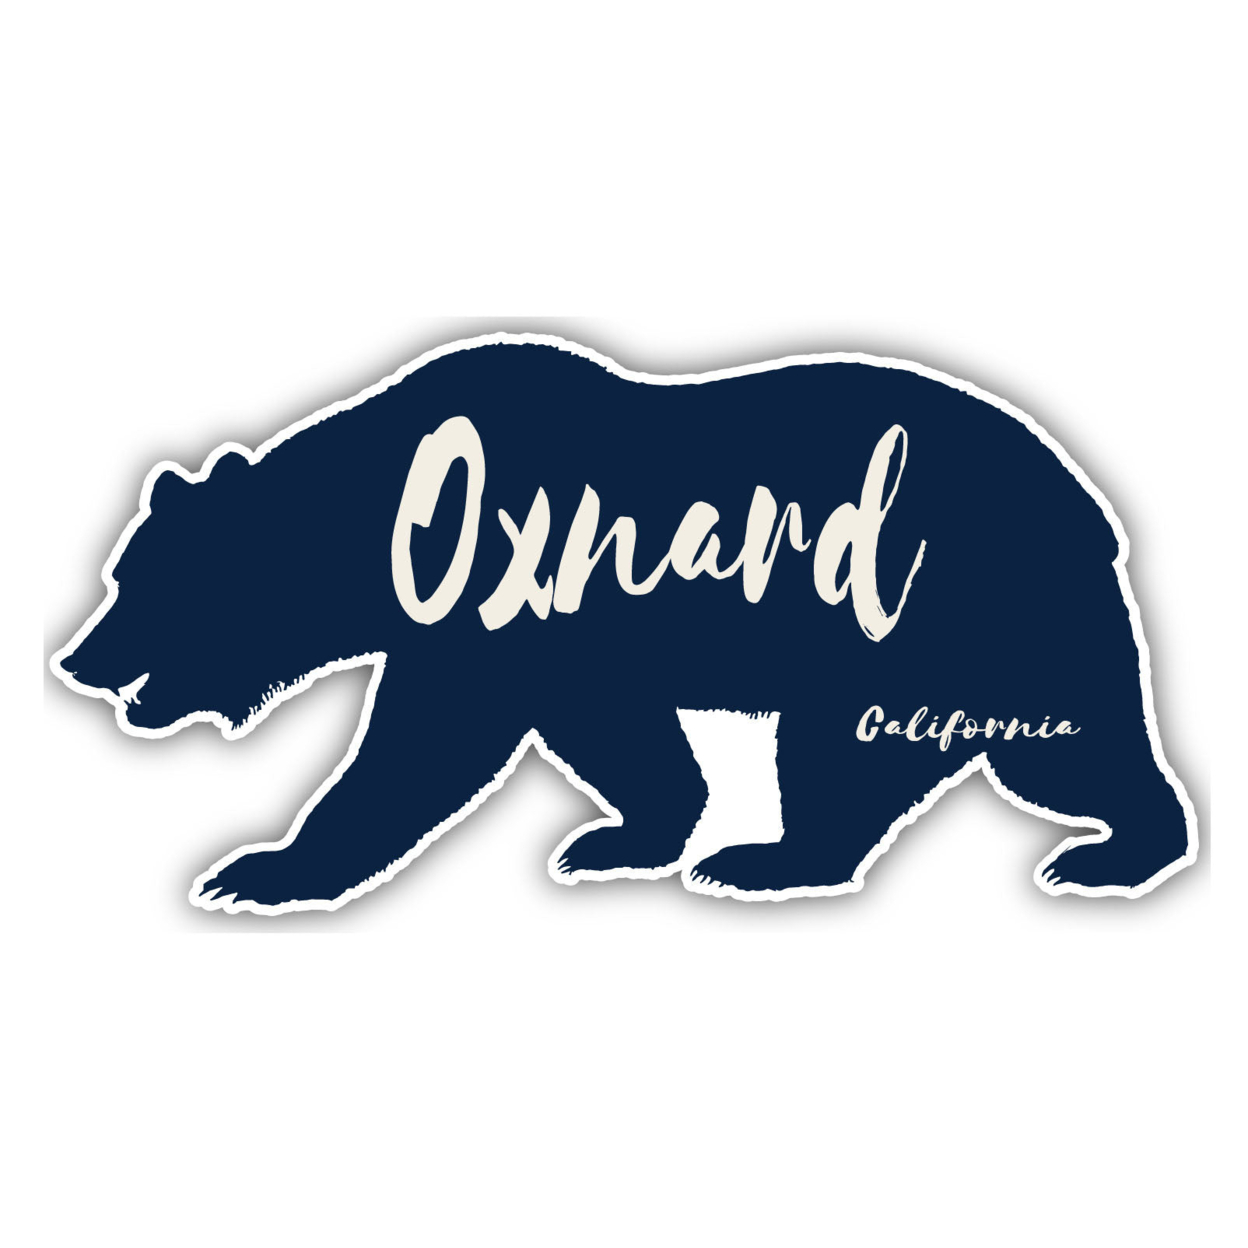 Oxnard California Souvenir Decorative Stickers (Choose Theme And Size) - Single Unit, 2-Inch, Bear